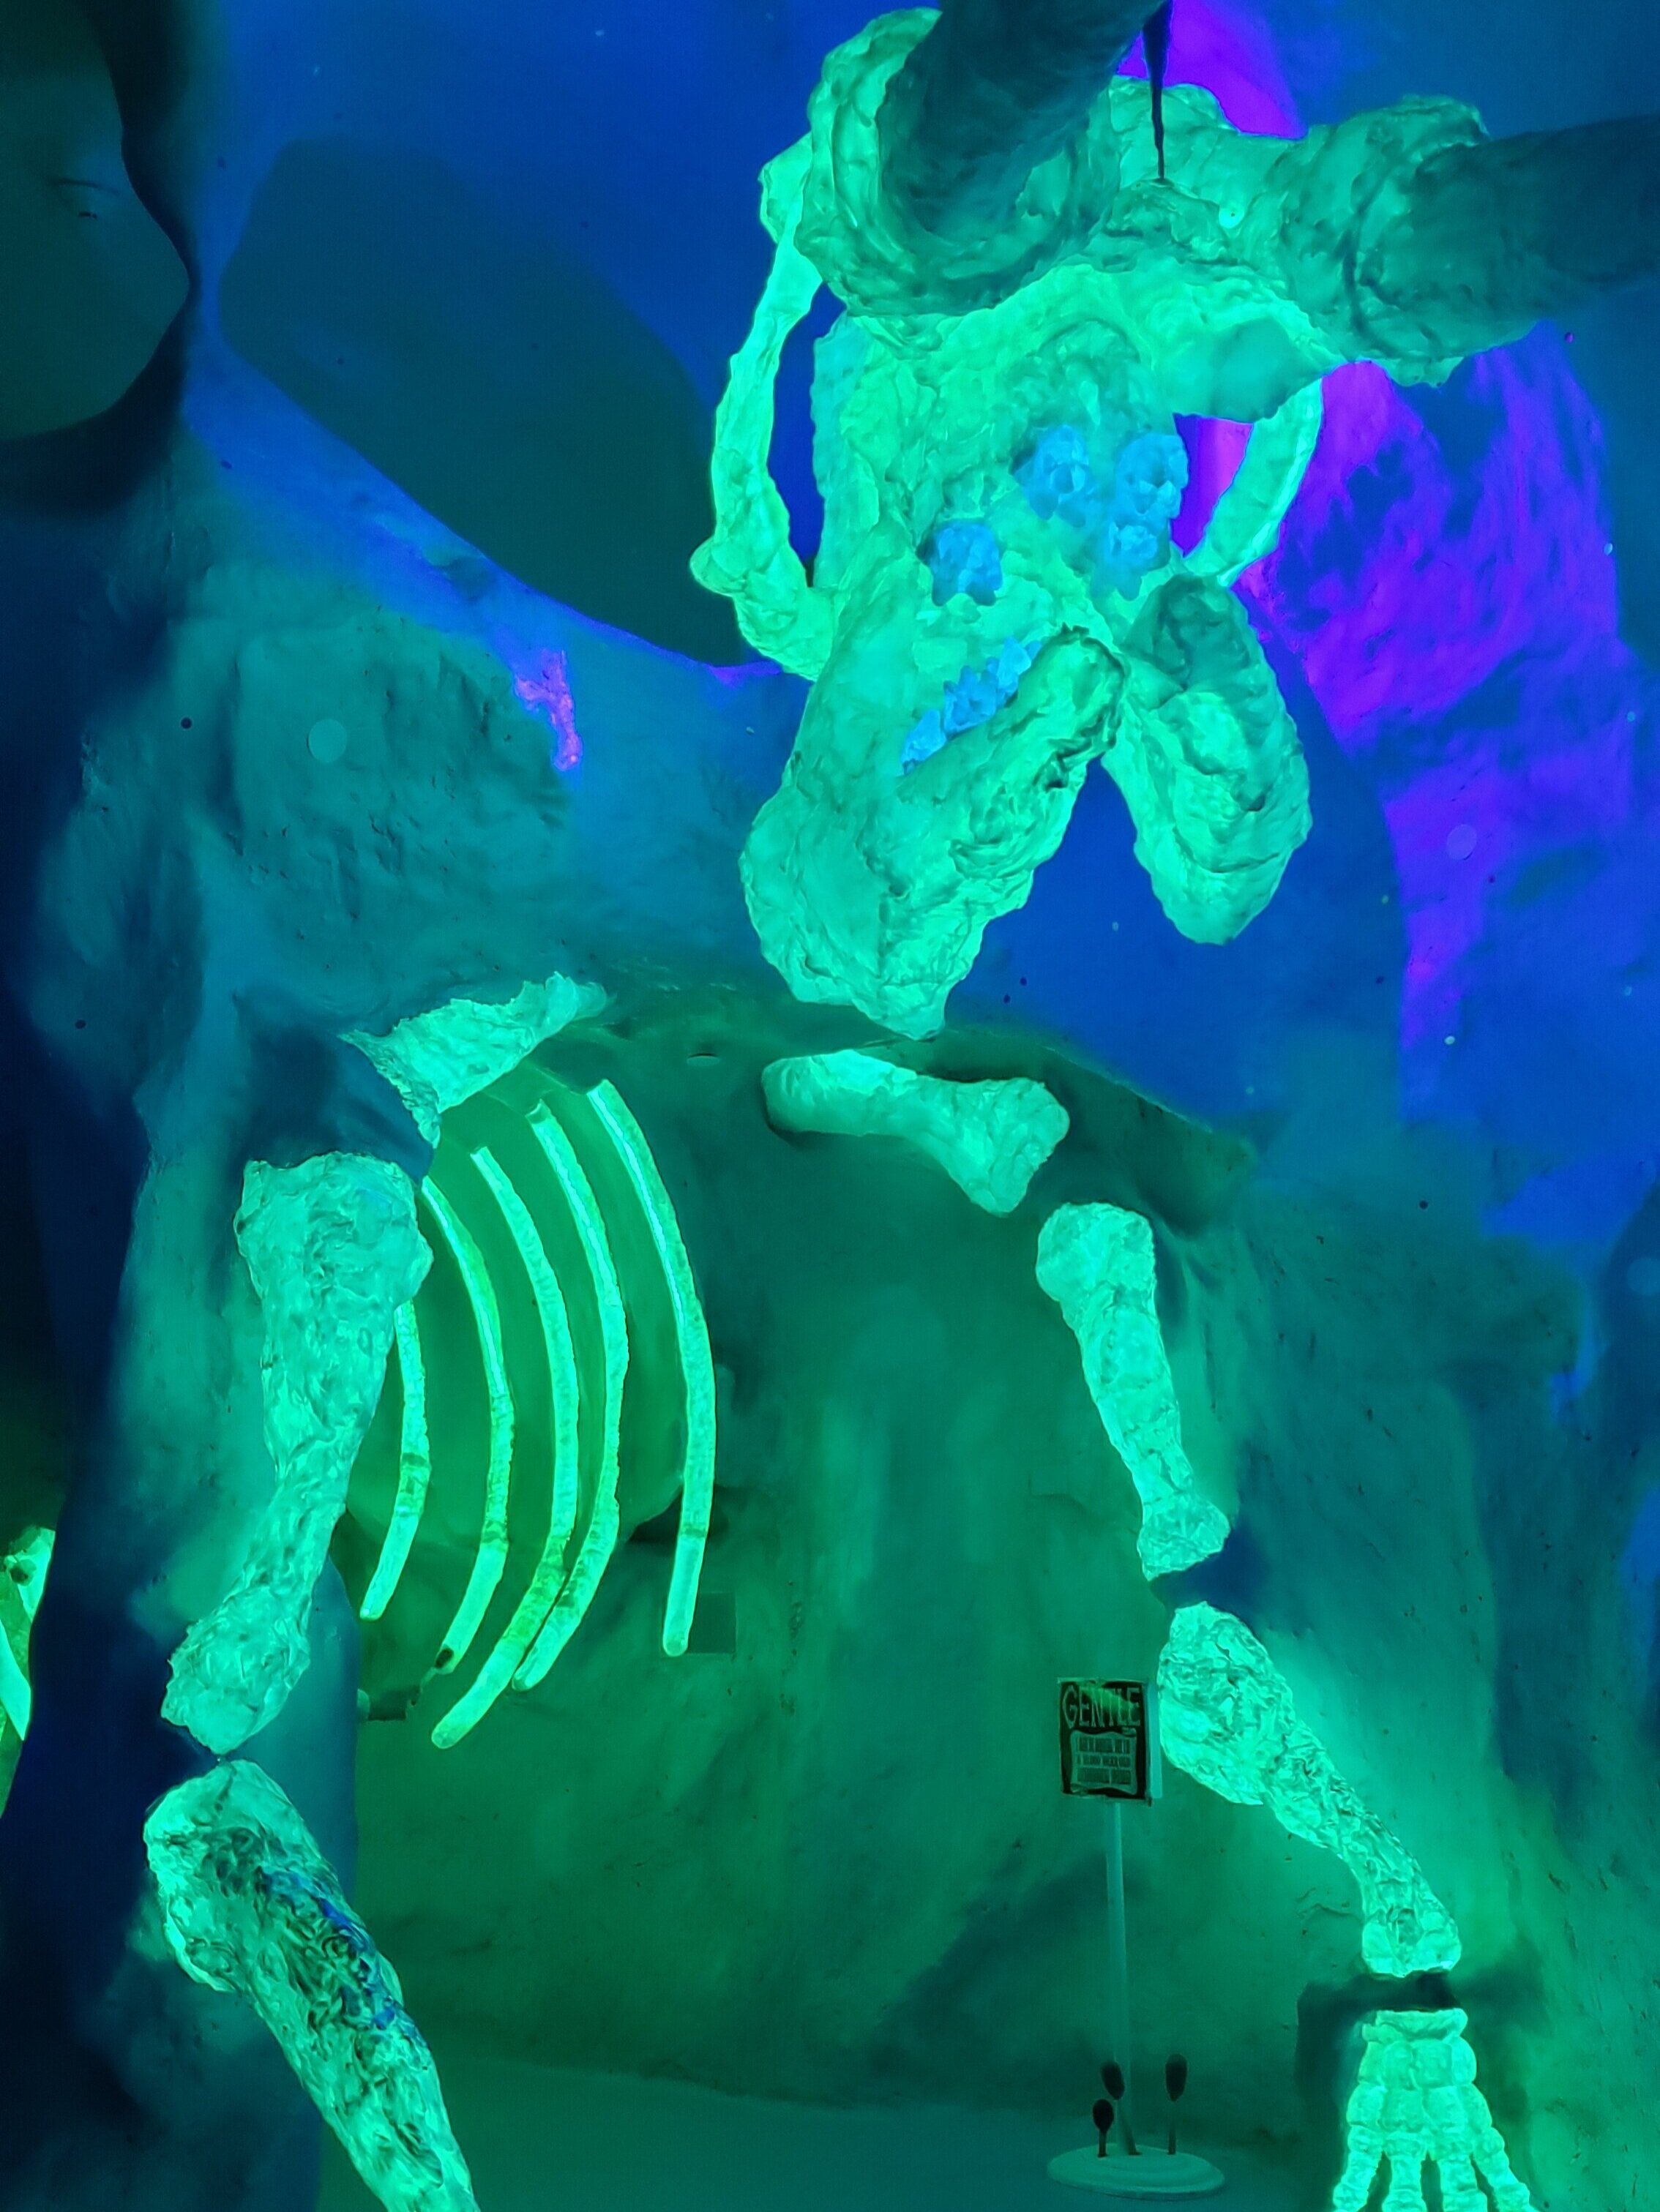 Green fluorescent art exhibit of a fake dinosaur skeleton